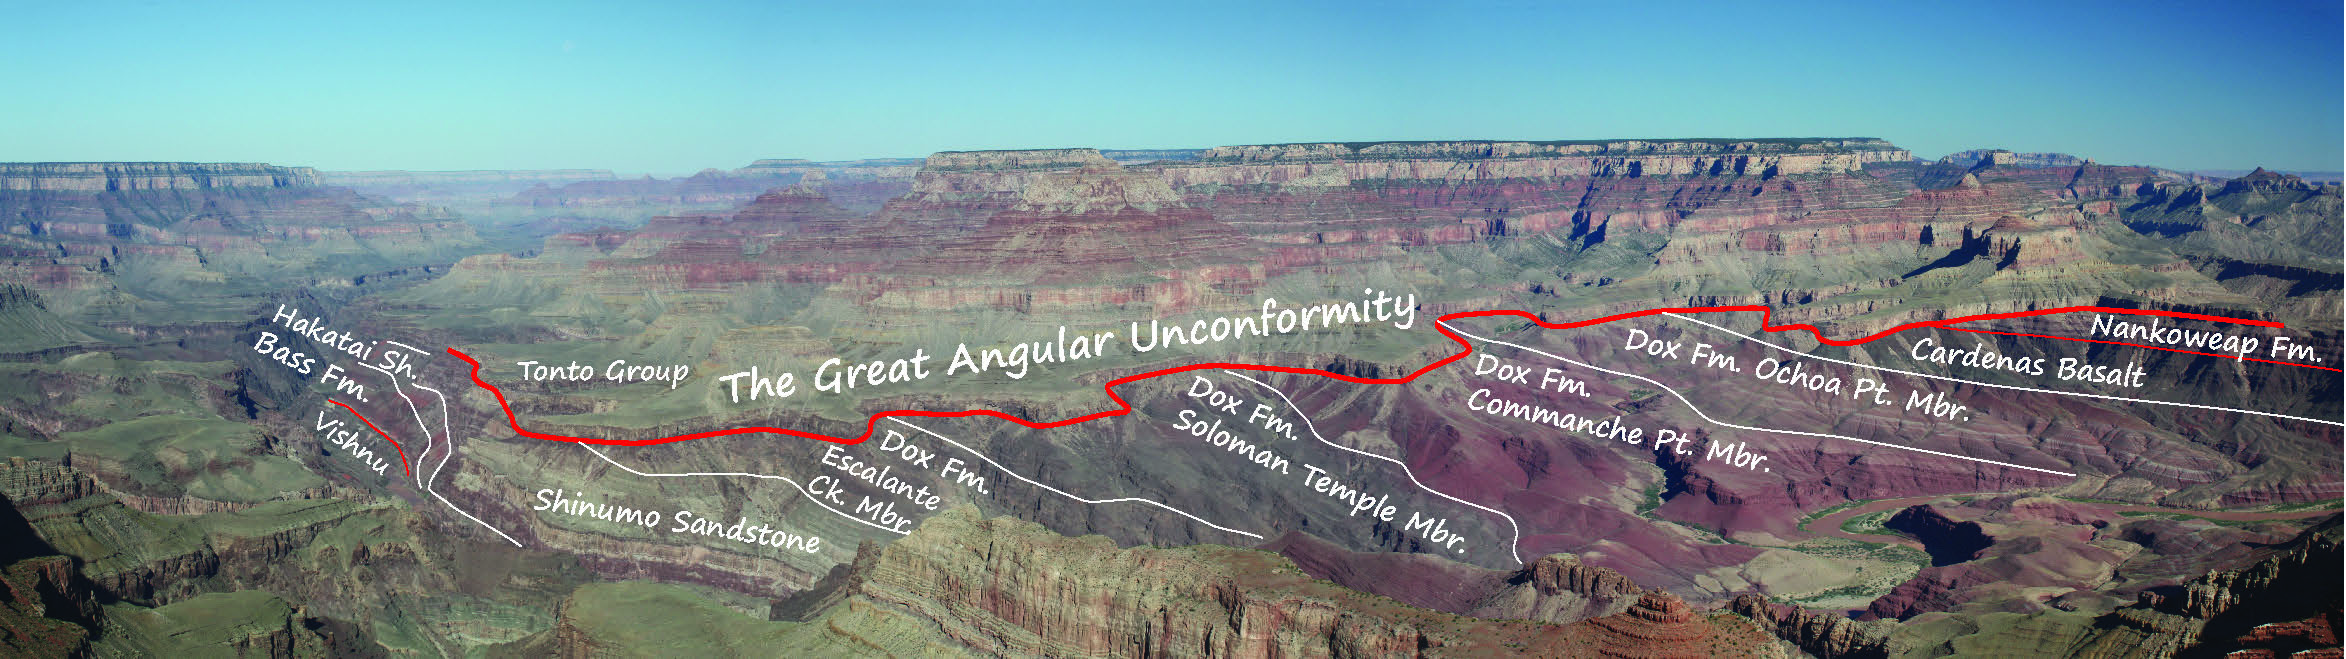 Grand Canyon Supergroup (U.S. National Park Service)